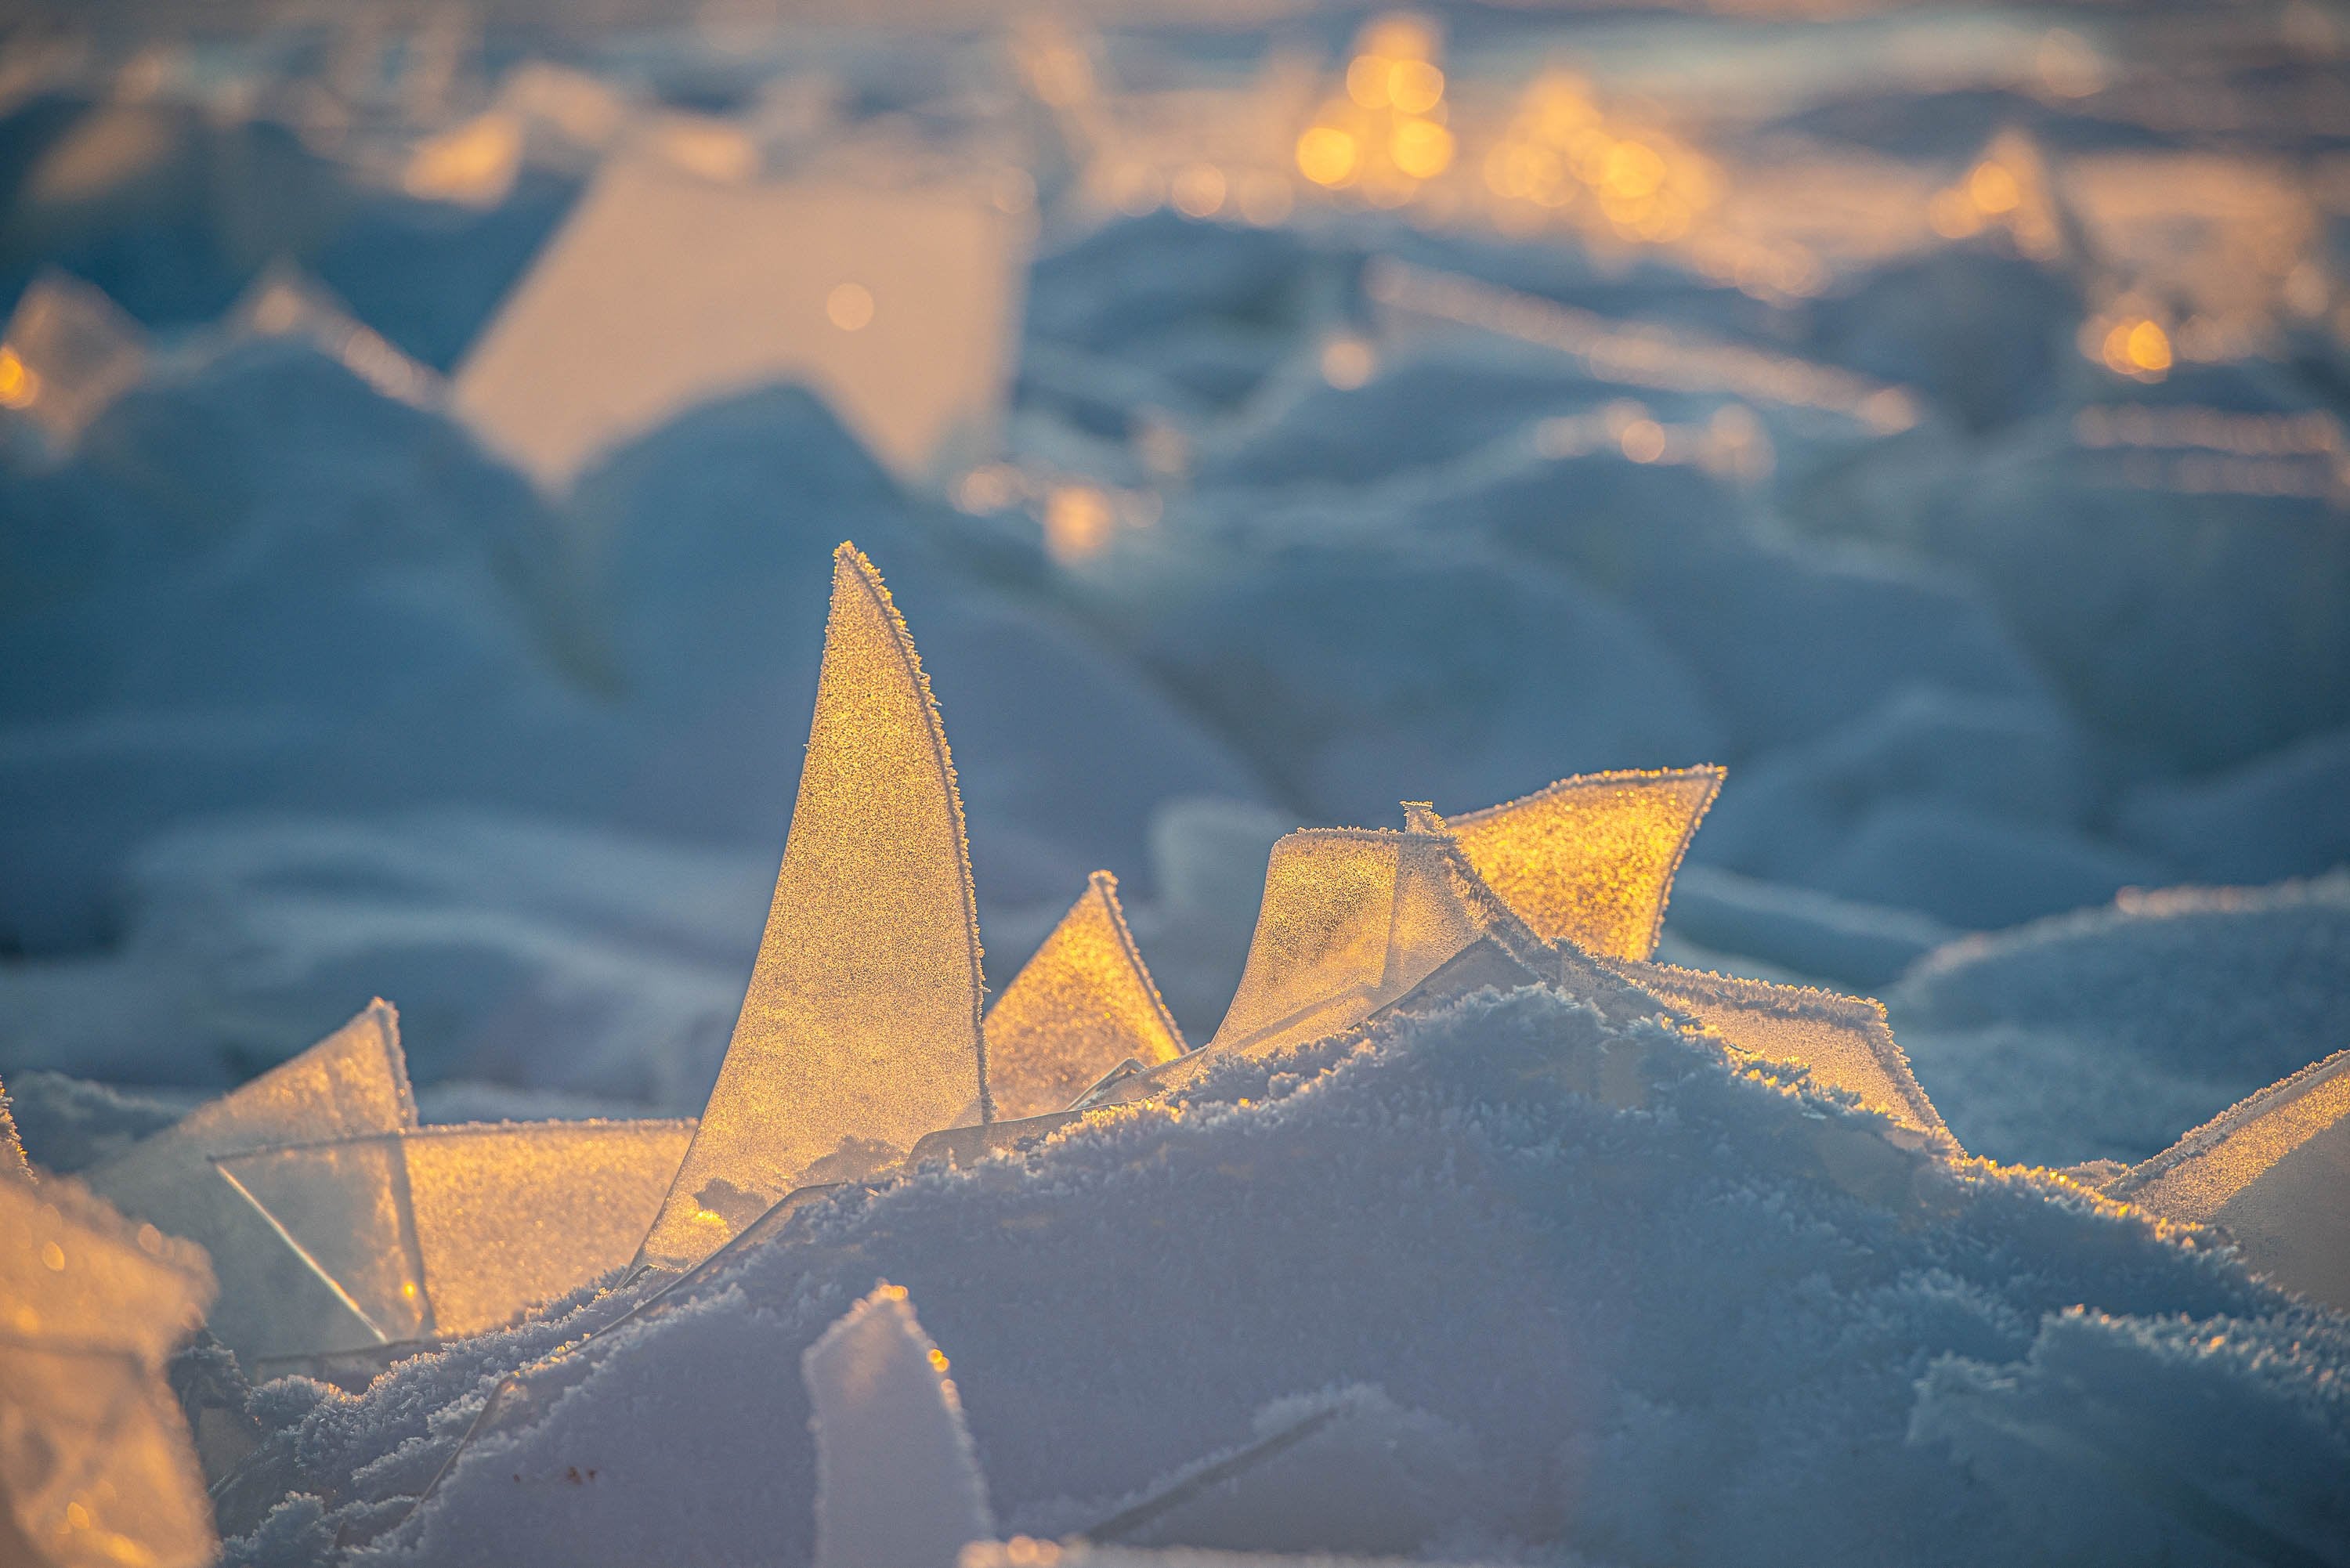 Close-up shot of sharp pieces of ice penetrating inside a soft snow mound, Lake Baikal #16, Siberia, Russia